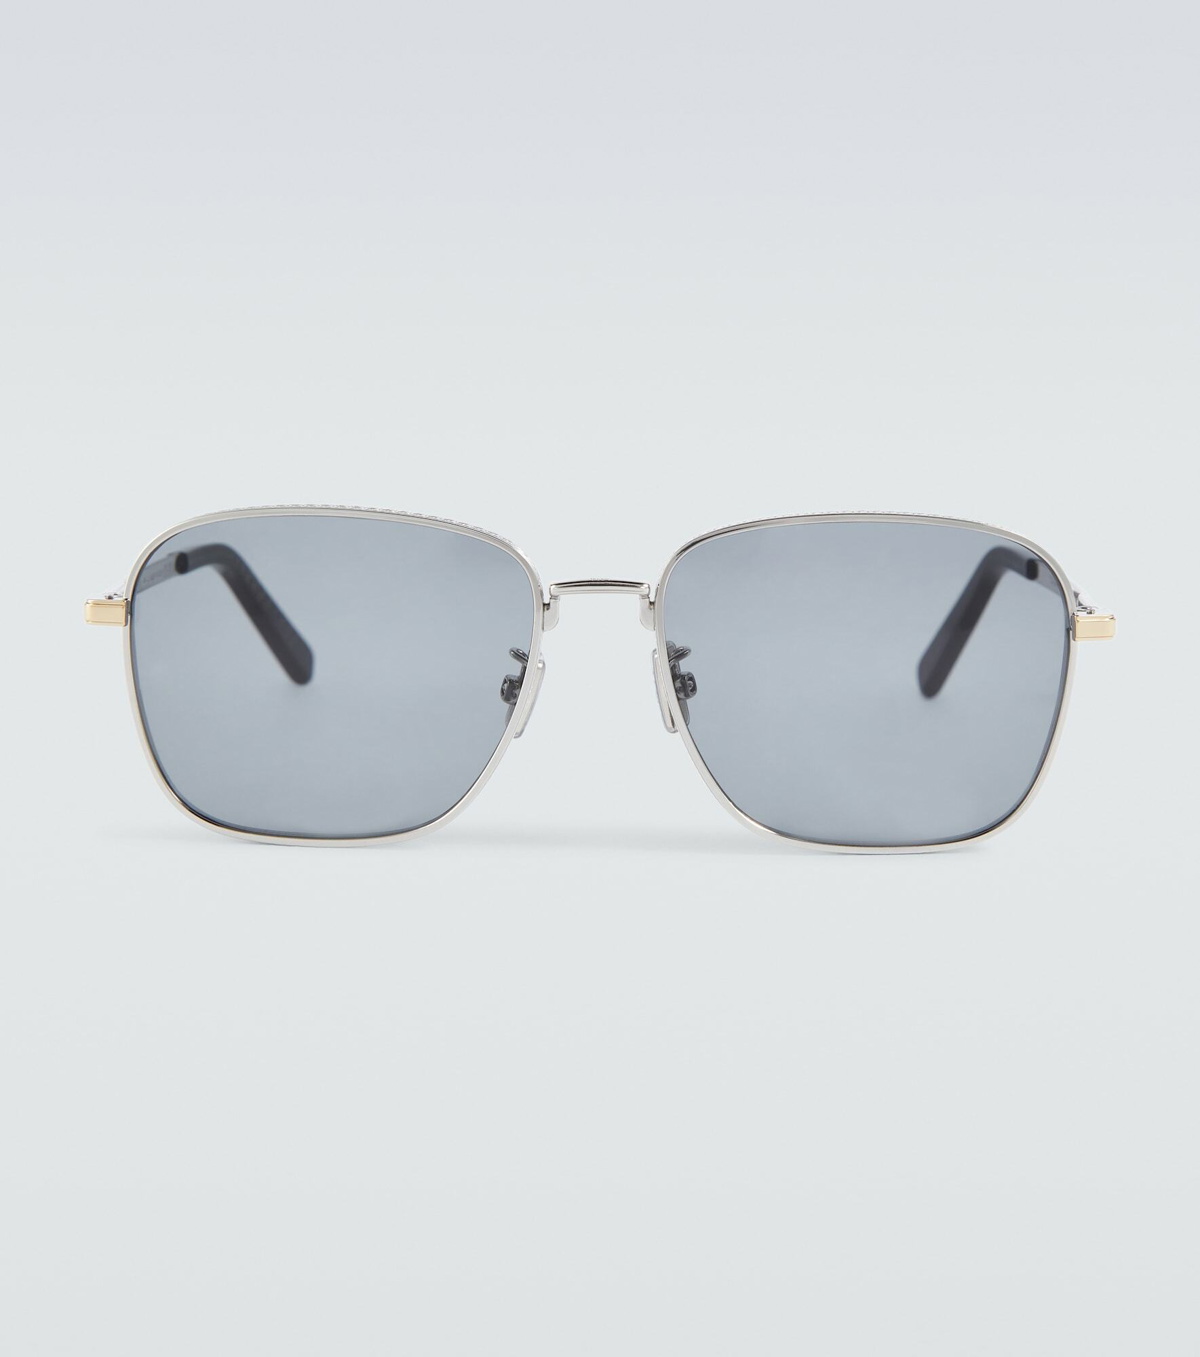 Dior Eyewear - CD Diamond S4U convertible aviator sunglasses Dior Eyewear